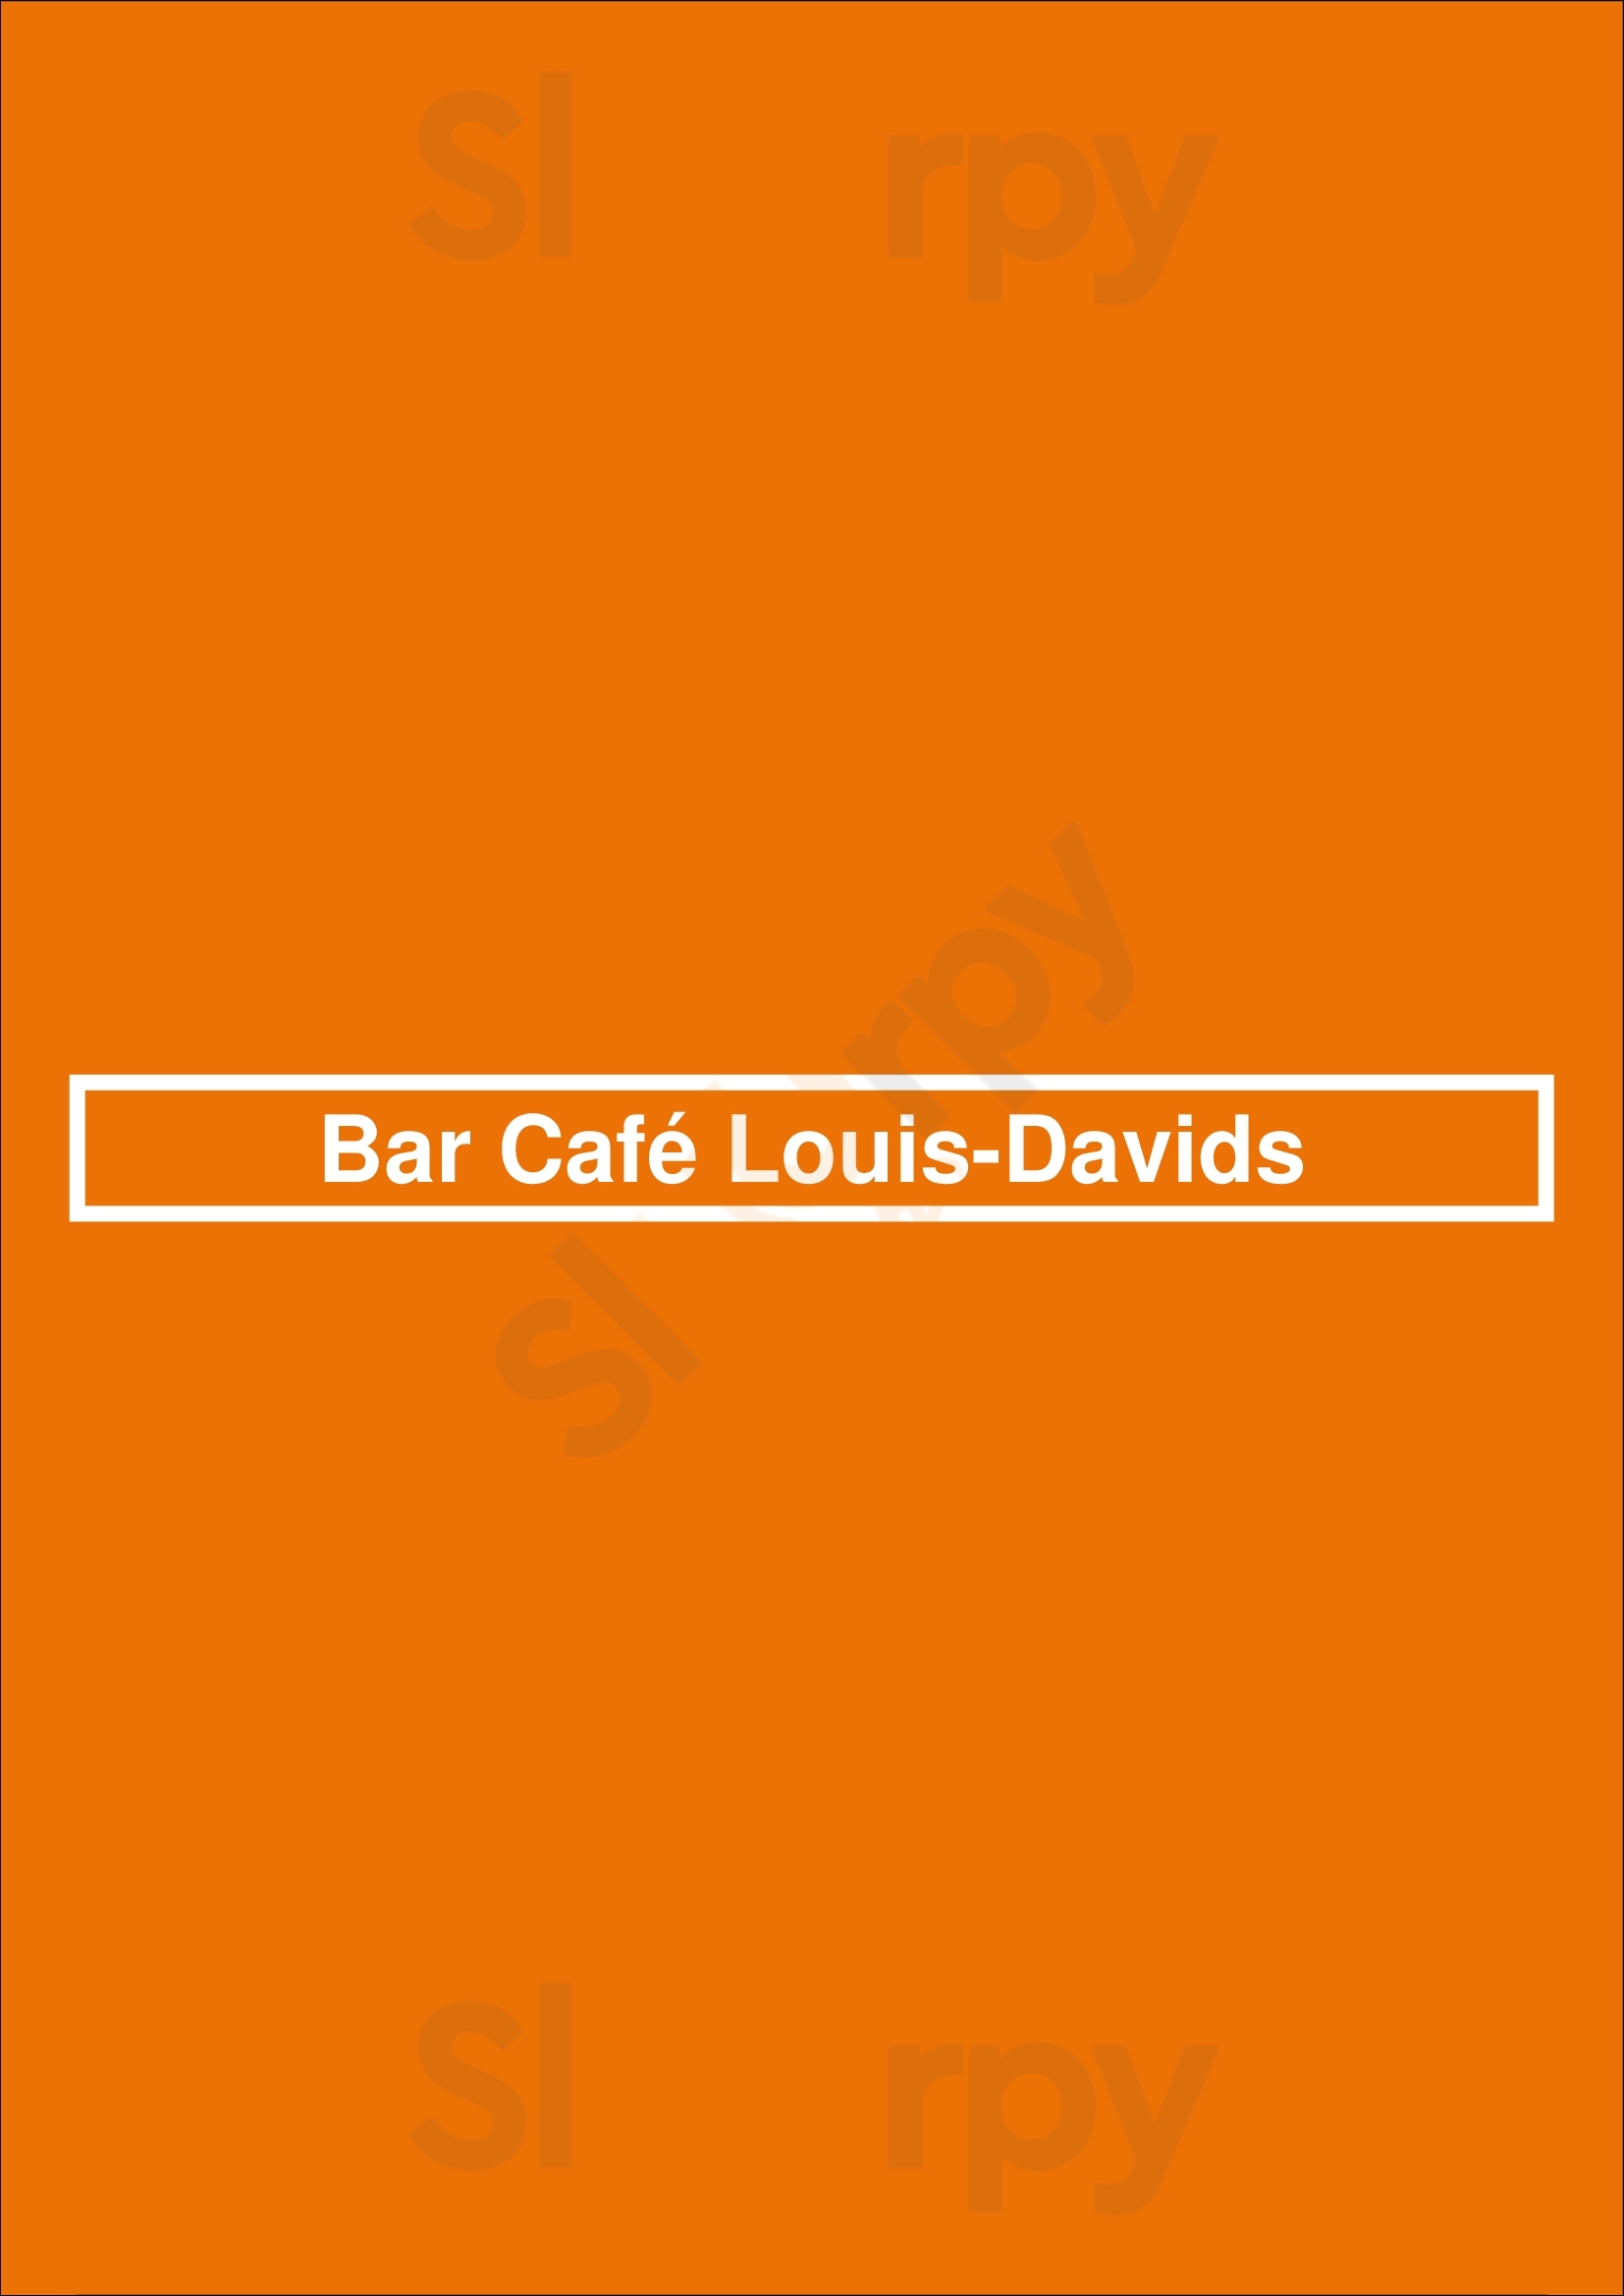 Bar Café Louis-davids Amsterdam Menu - 1